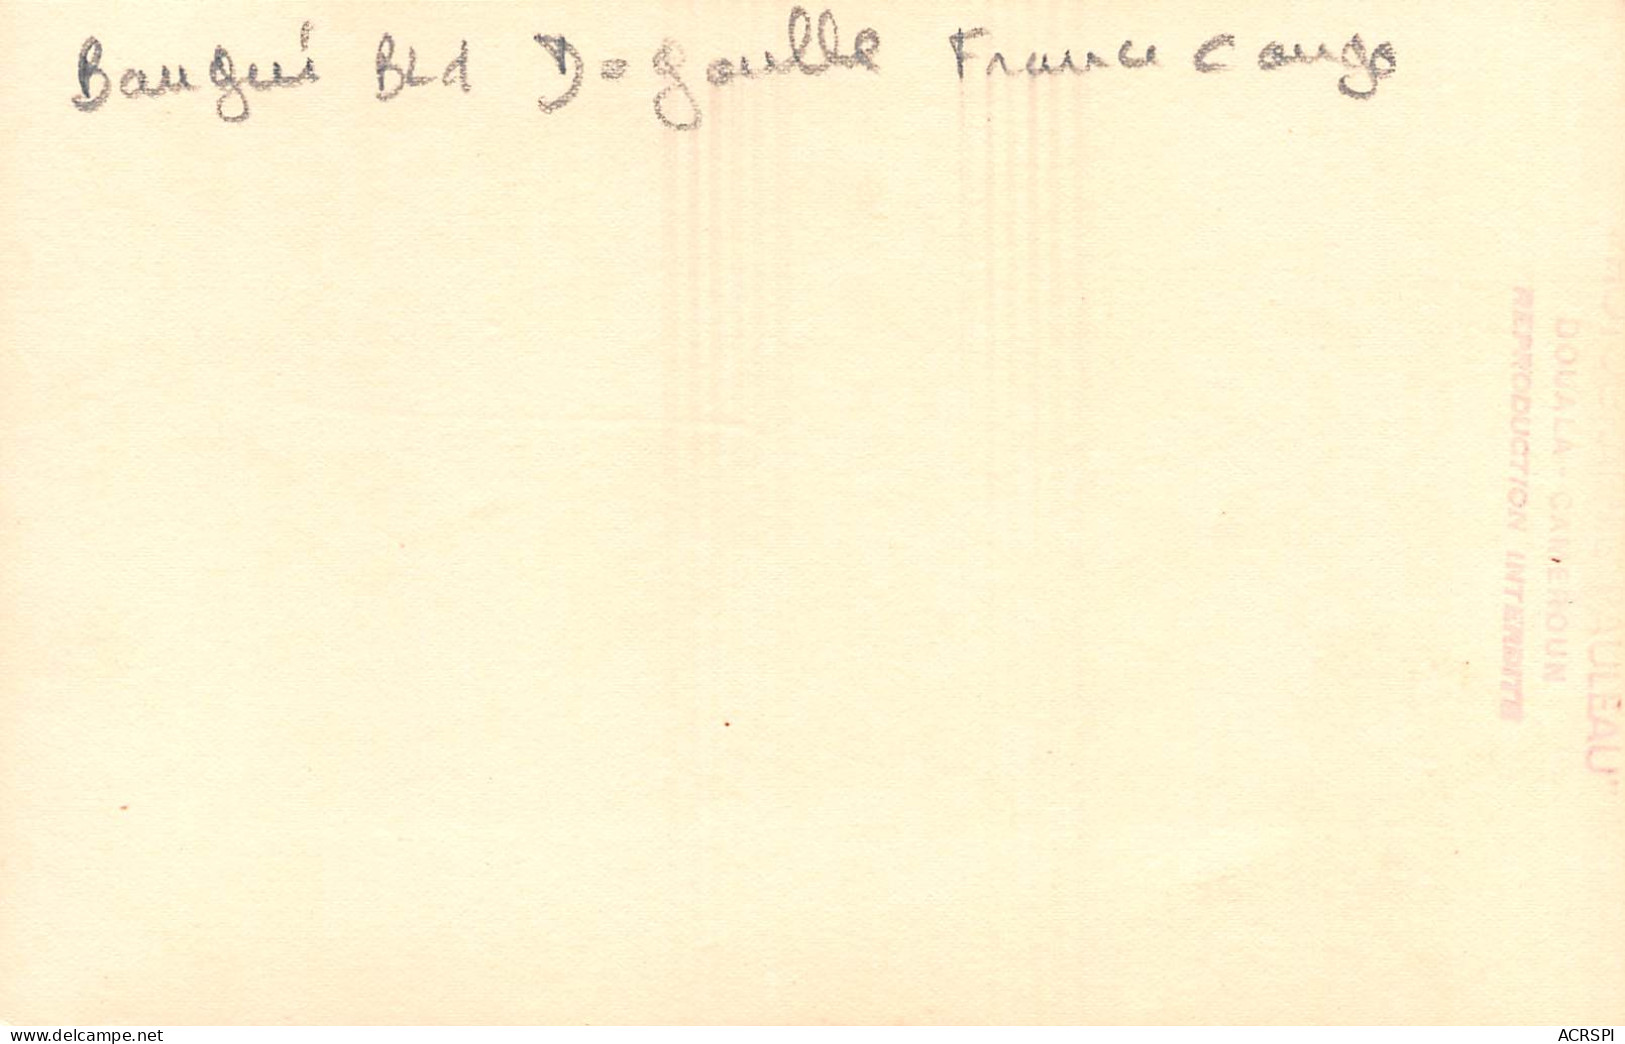 BANGUI République Centrafricaine France Congo Bld De Gaulle Photo PAULEA Non Circulé (Scan R/V) N° 53 \MP7121 - Centraal-Afrikaanse Republiek